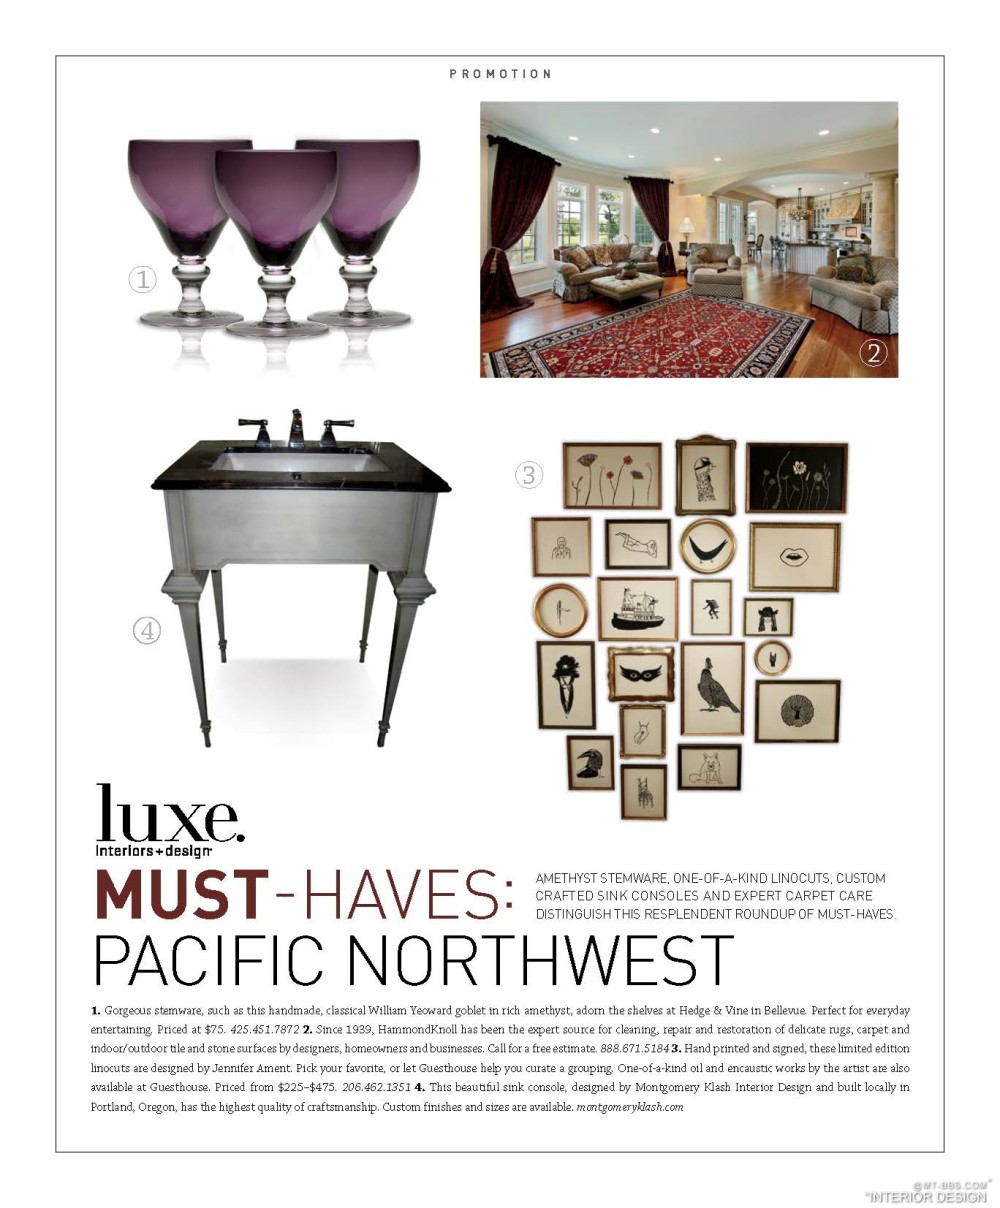 Luxe Interiors Design-pacific northwest2013春季号_页面_082.jpg